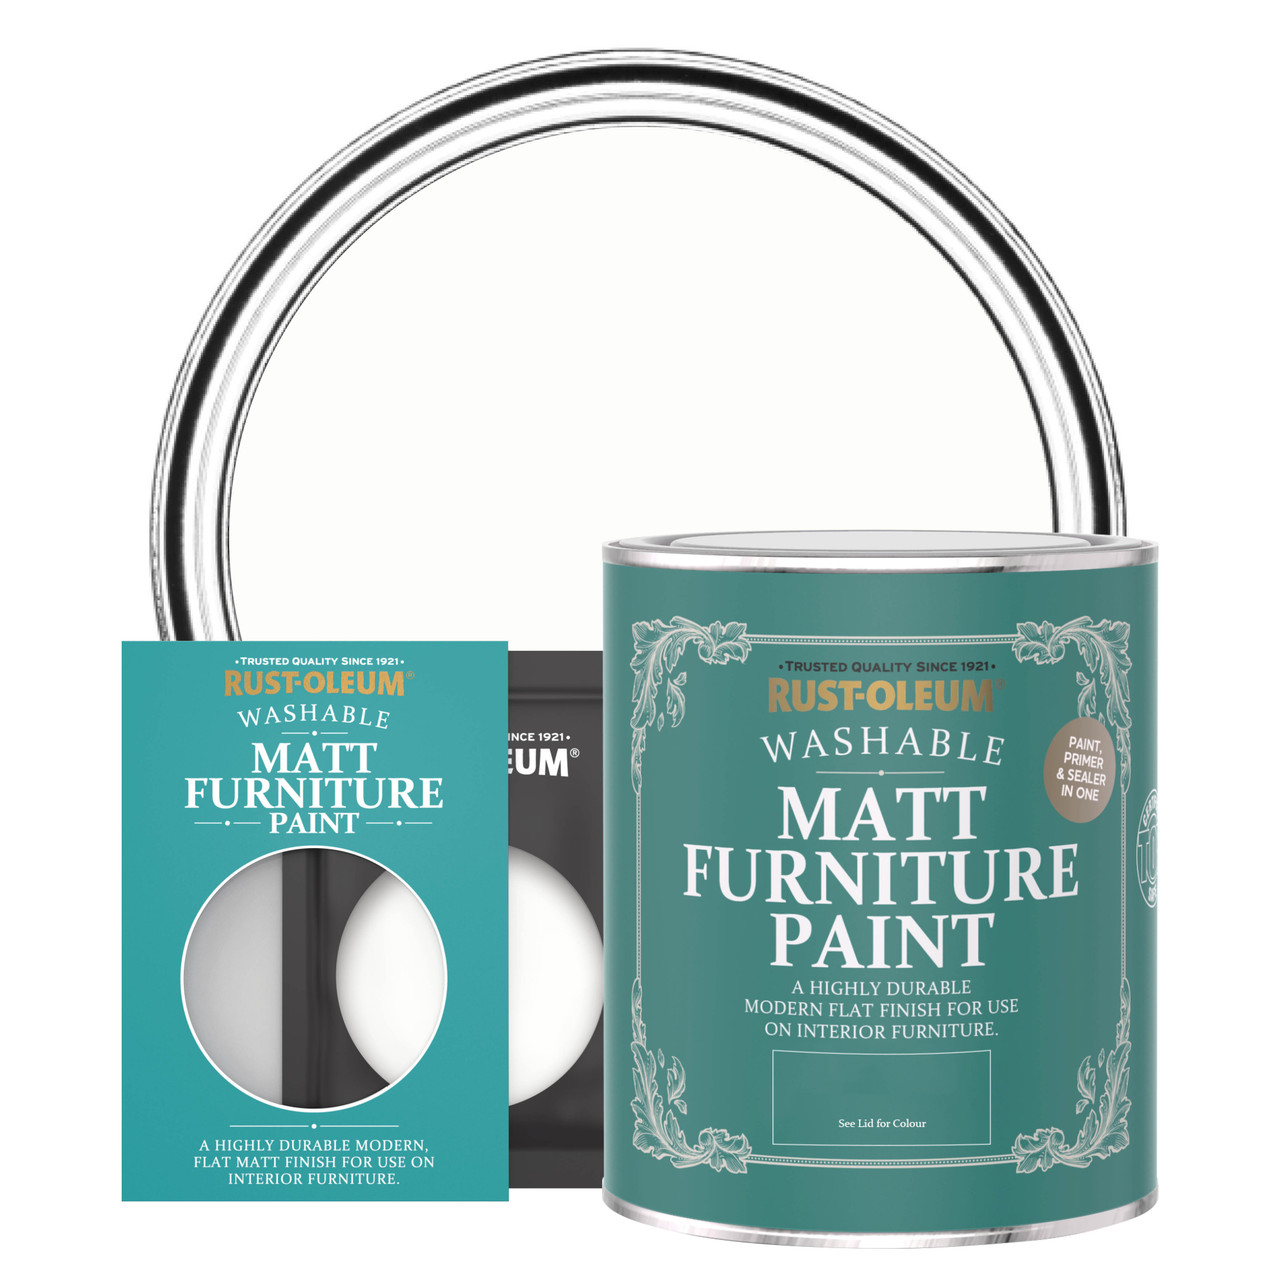 Rust-Oleum Matt Furniture Paint - CHALK WHITE - 750ml